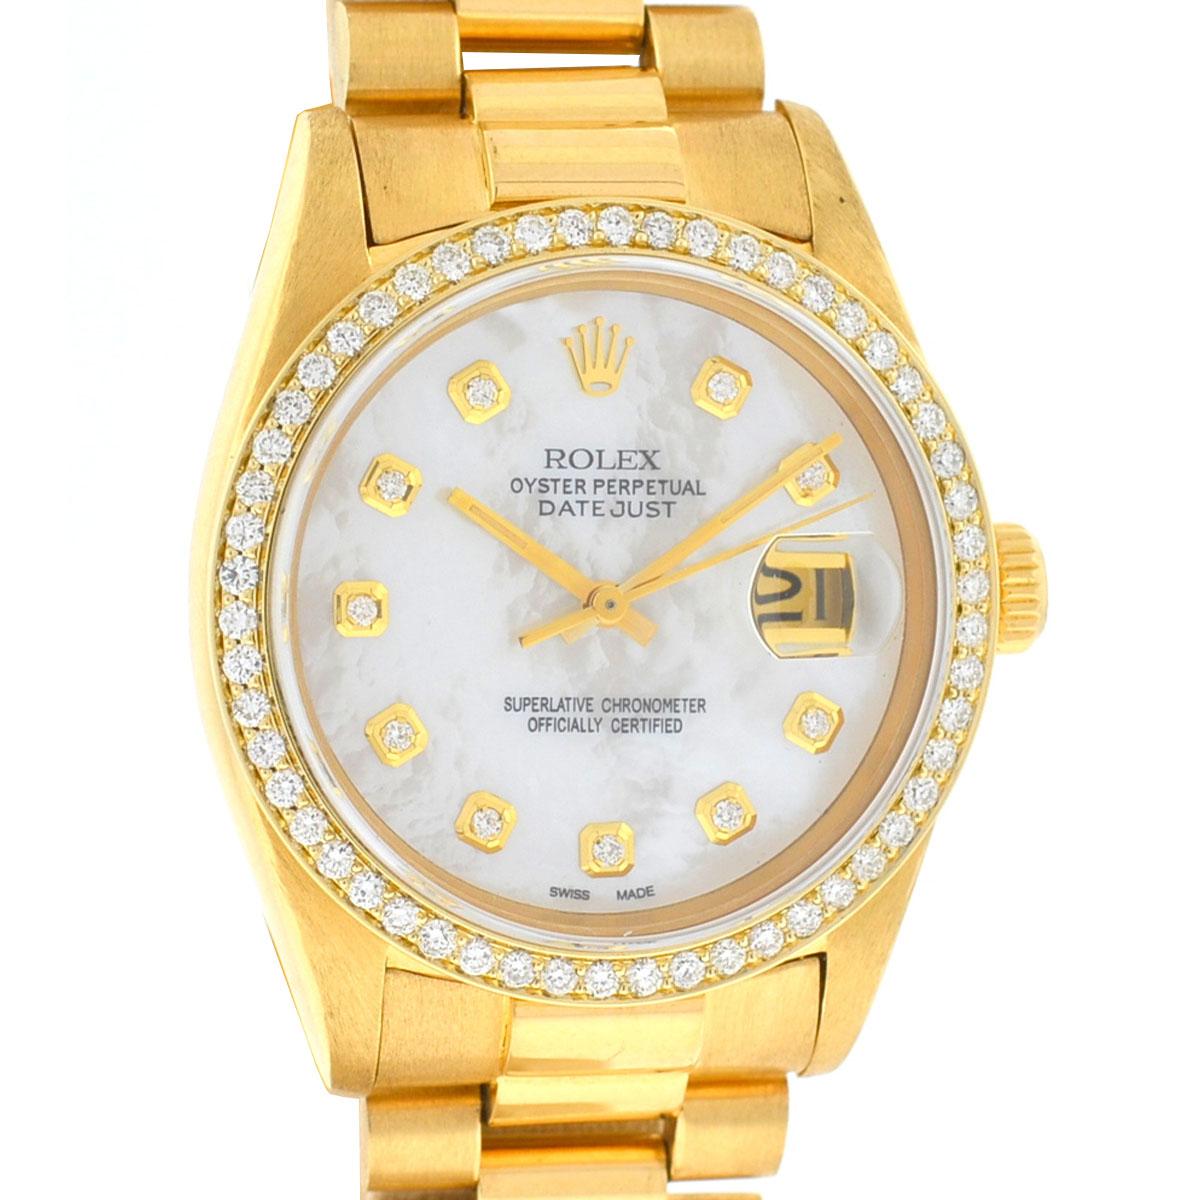 Company - Rolex
Style - Luxury Watch
Model - Datejust
Reference Number - 16018
Case Metal - 18k Yellow Gold
Case Measurement - 36 mm
Bracelet - 18k Yellow Gold
Dial - CUSTOM MOP DIAMOND DIAL
Bezel - CUSTOM DIAMOND BEZEL
Crystal - Scratch Resistant